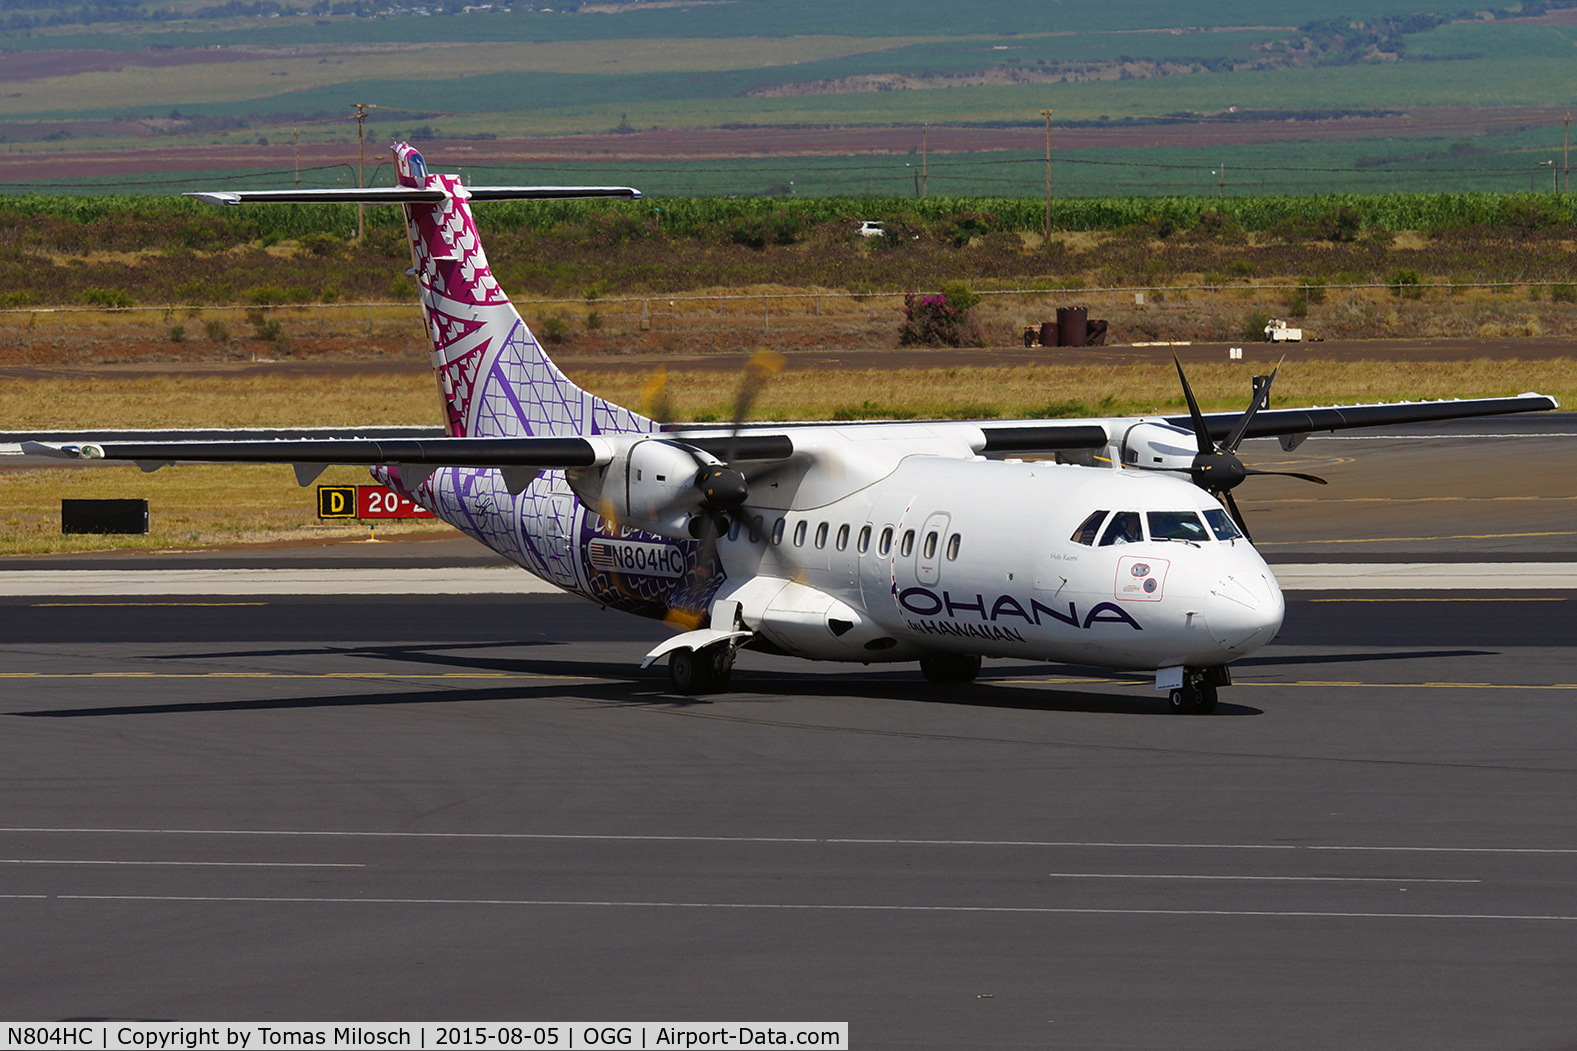 N804HC, 2004 ATR 42-500 C/N 623, ‘Ohana by Hawaiian – subsidiary of Hawaiian Airlines – is providing additional interisland services since 2014.